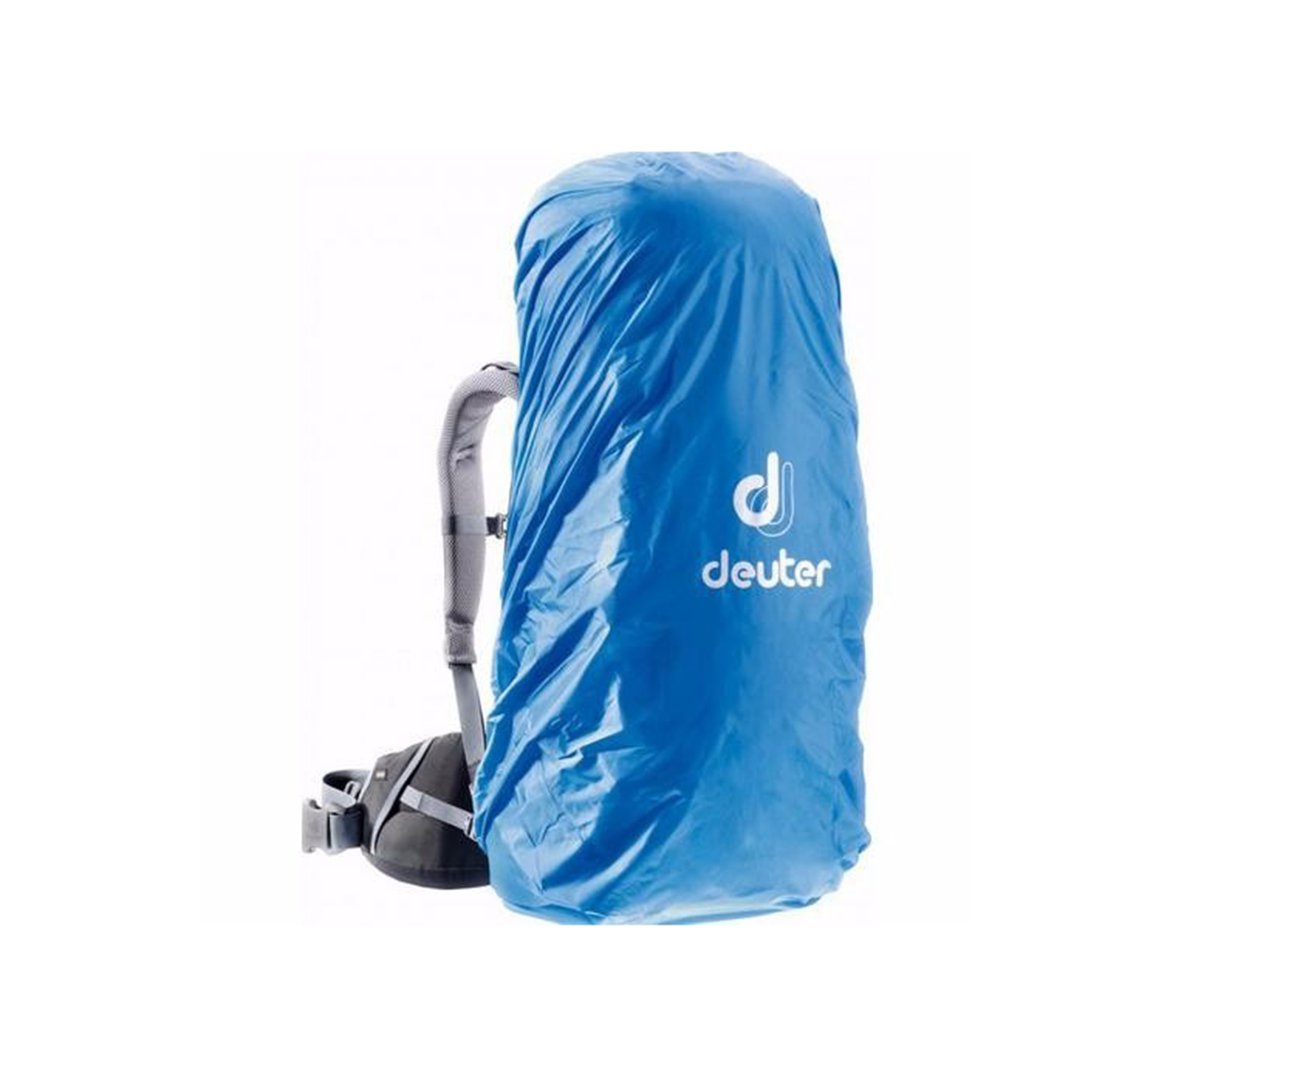 Capa de chuva para mochila Deuter Rain Cover II 30 à 50 litros